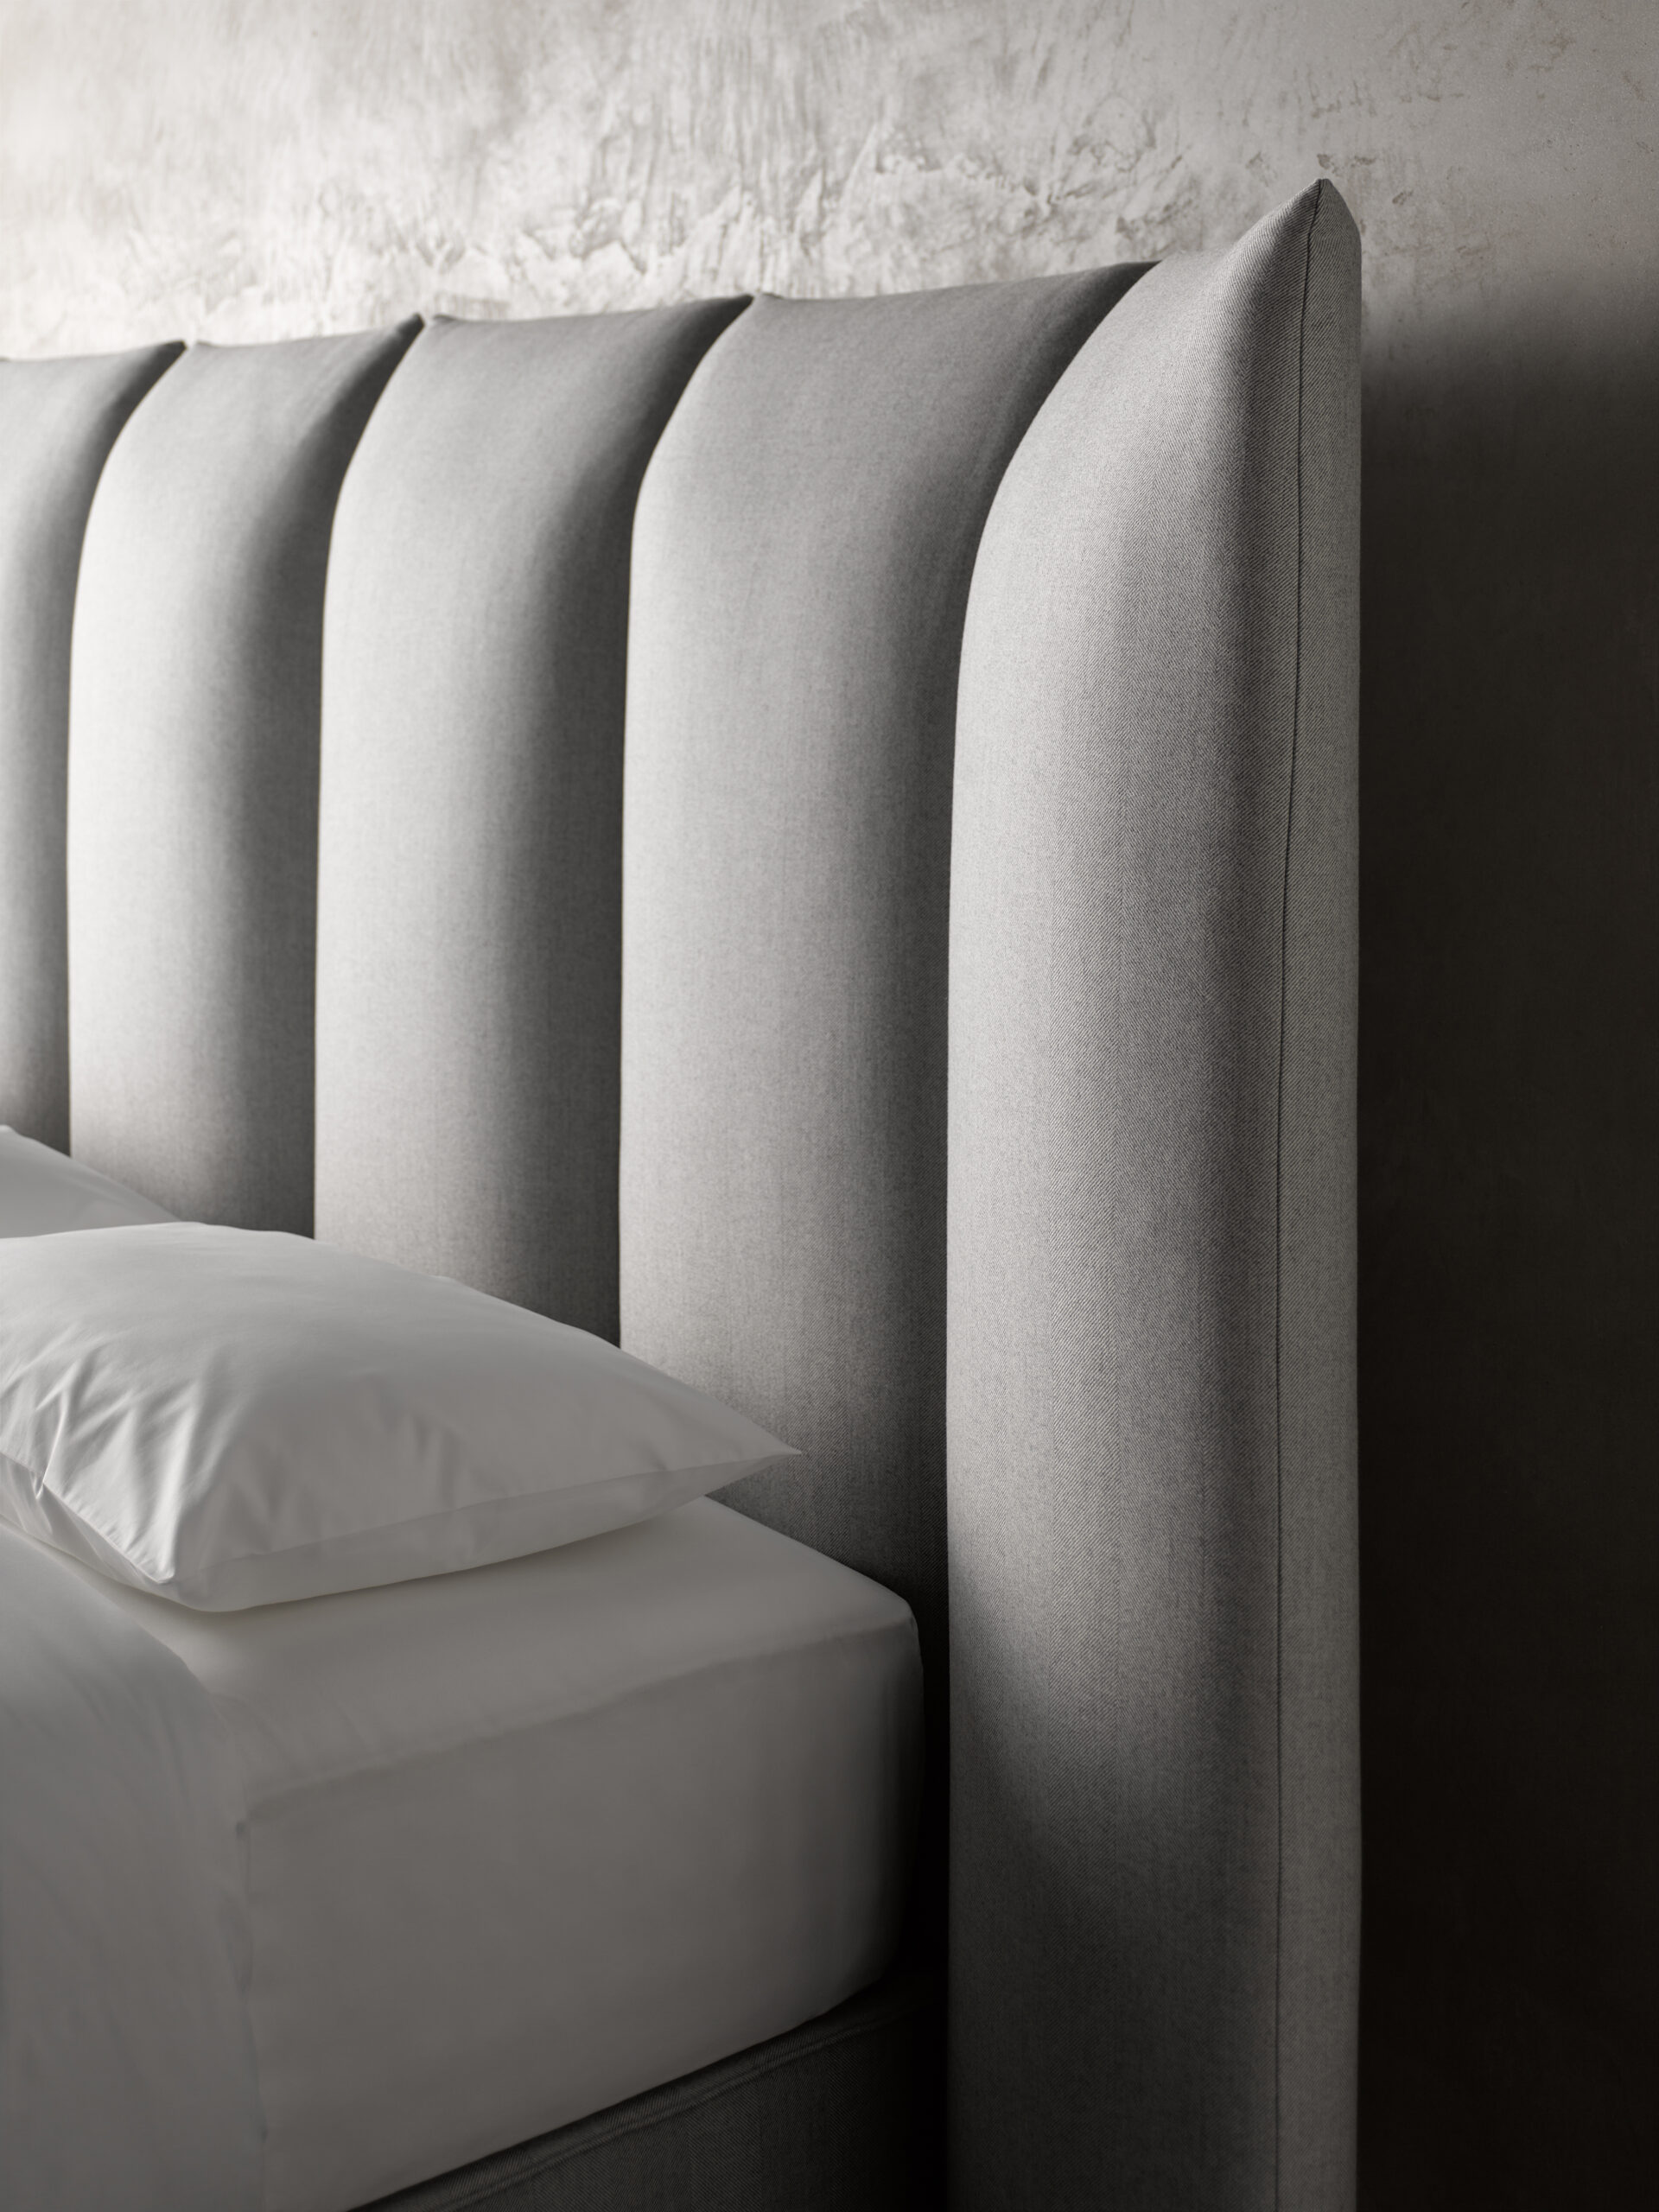 Headboard detail of Nuvola bed designed by Debiasi Sandri for Schramm